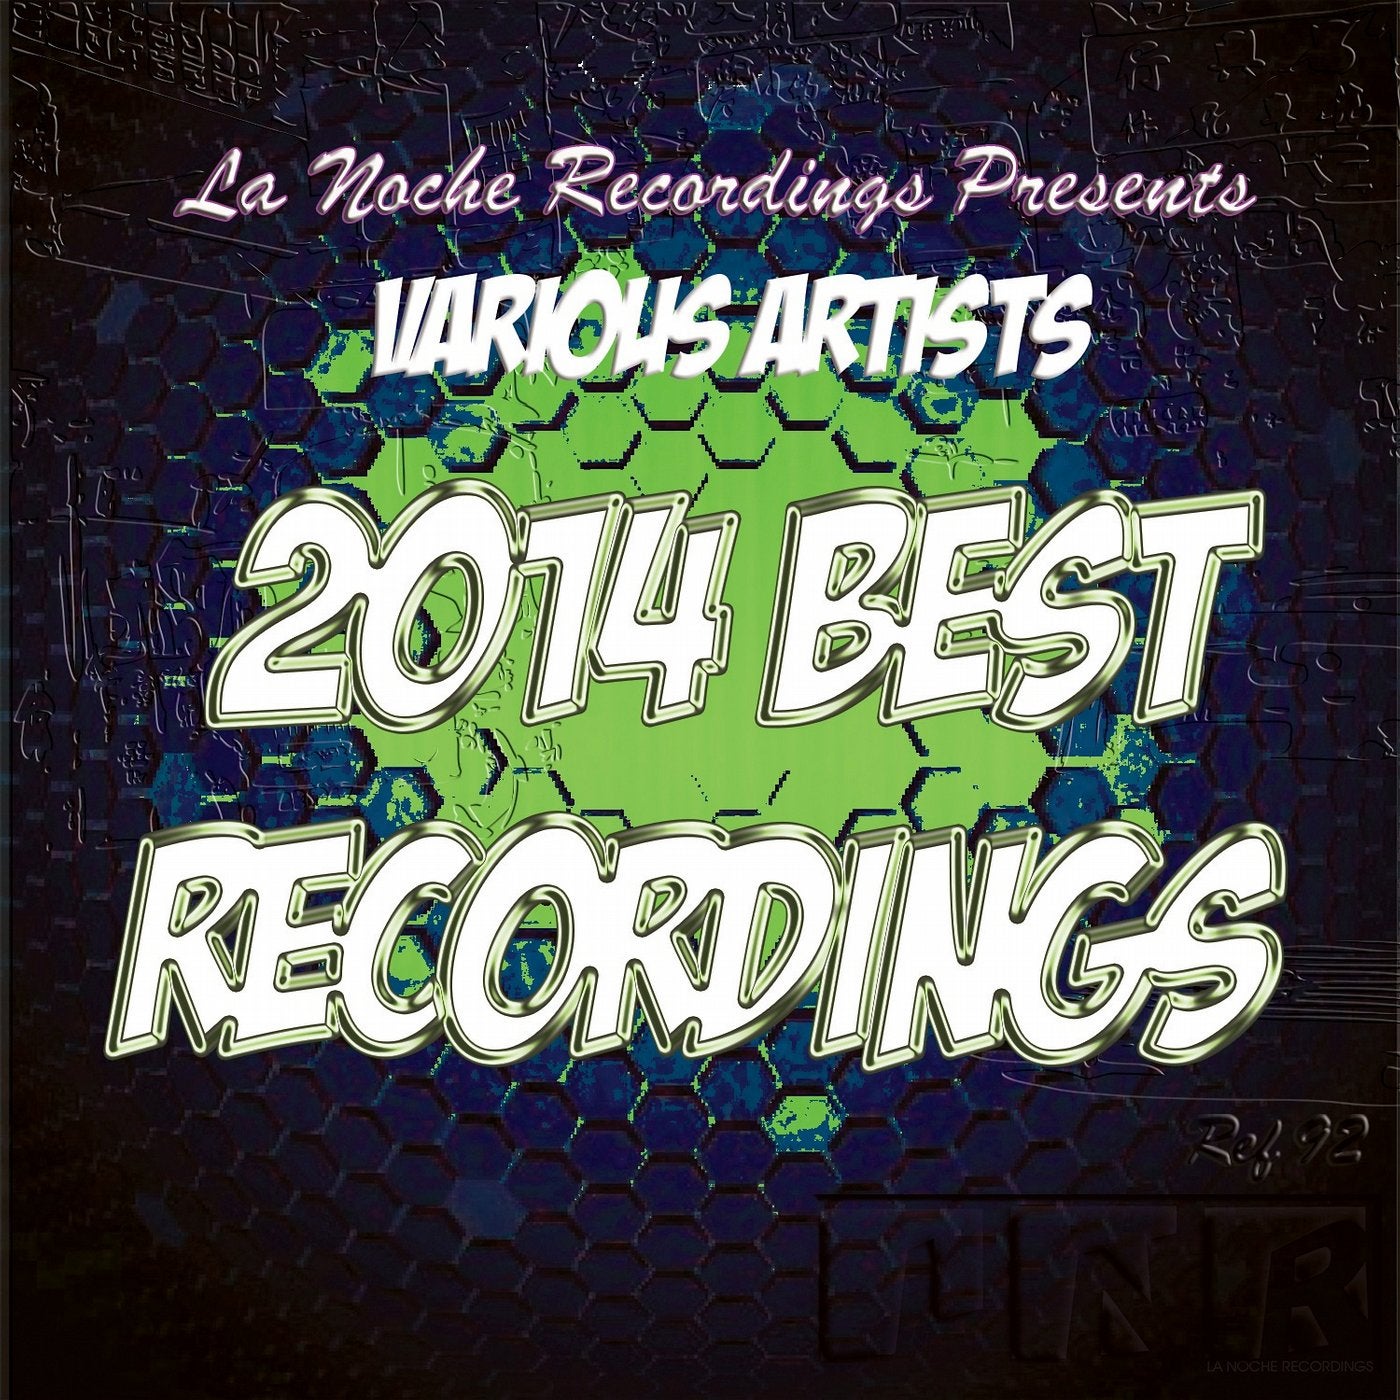 2014 Best Recordings